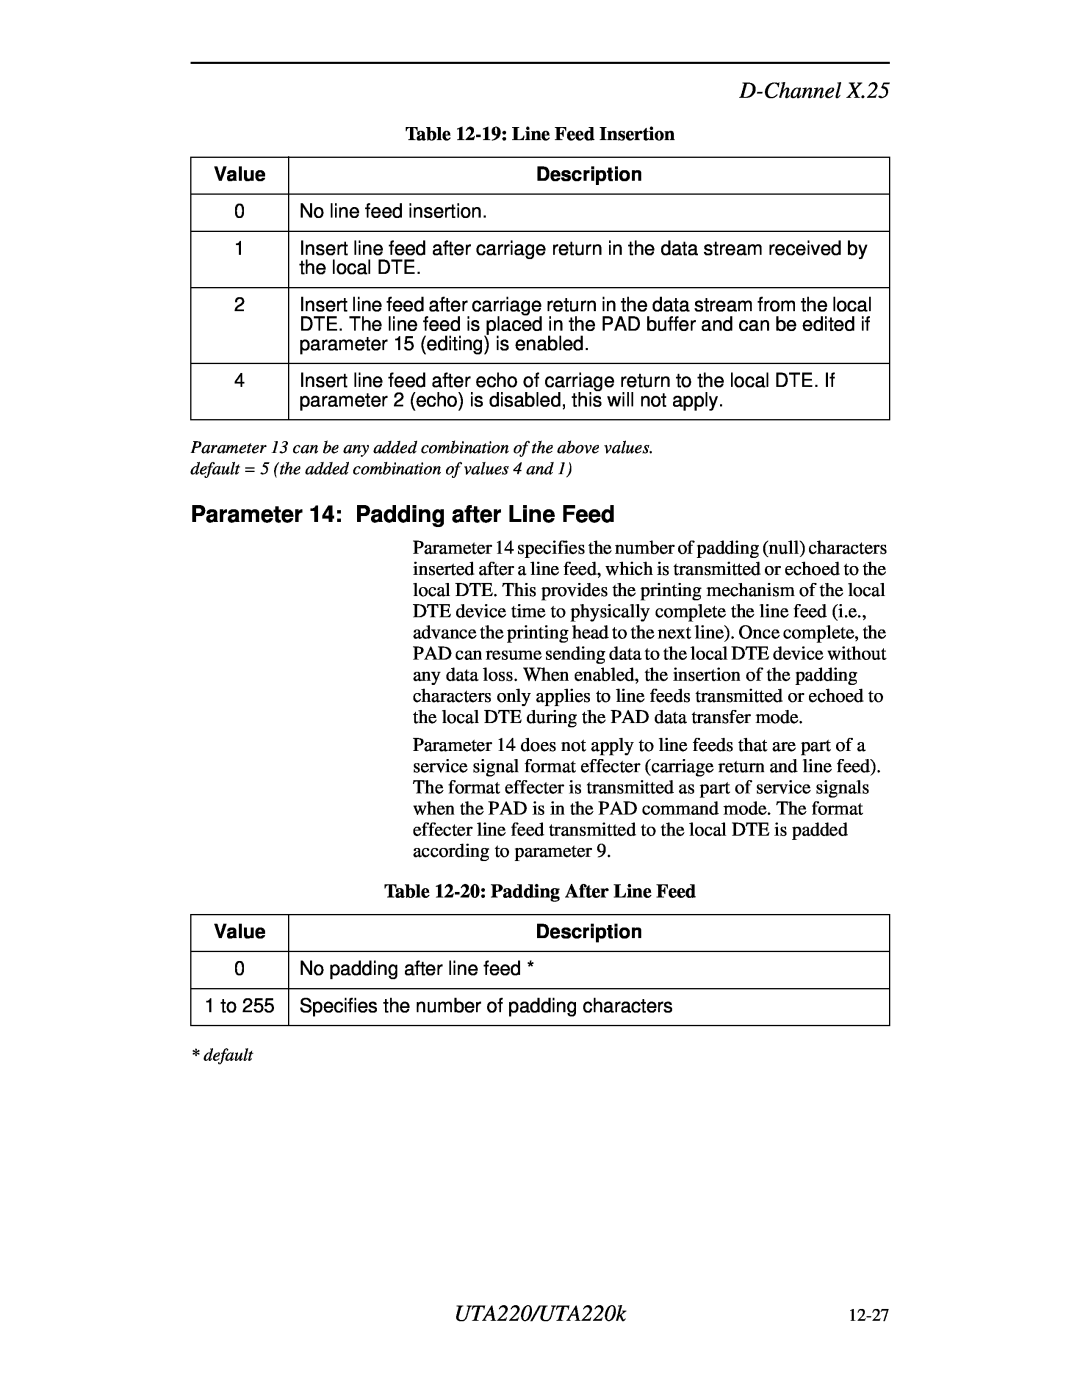 Northern UTA220/UTA220k manual Parameter 14 Padding after Line Feed, D-Channel, Value, Description 